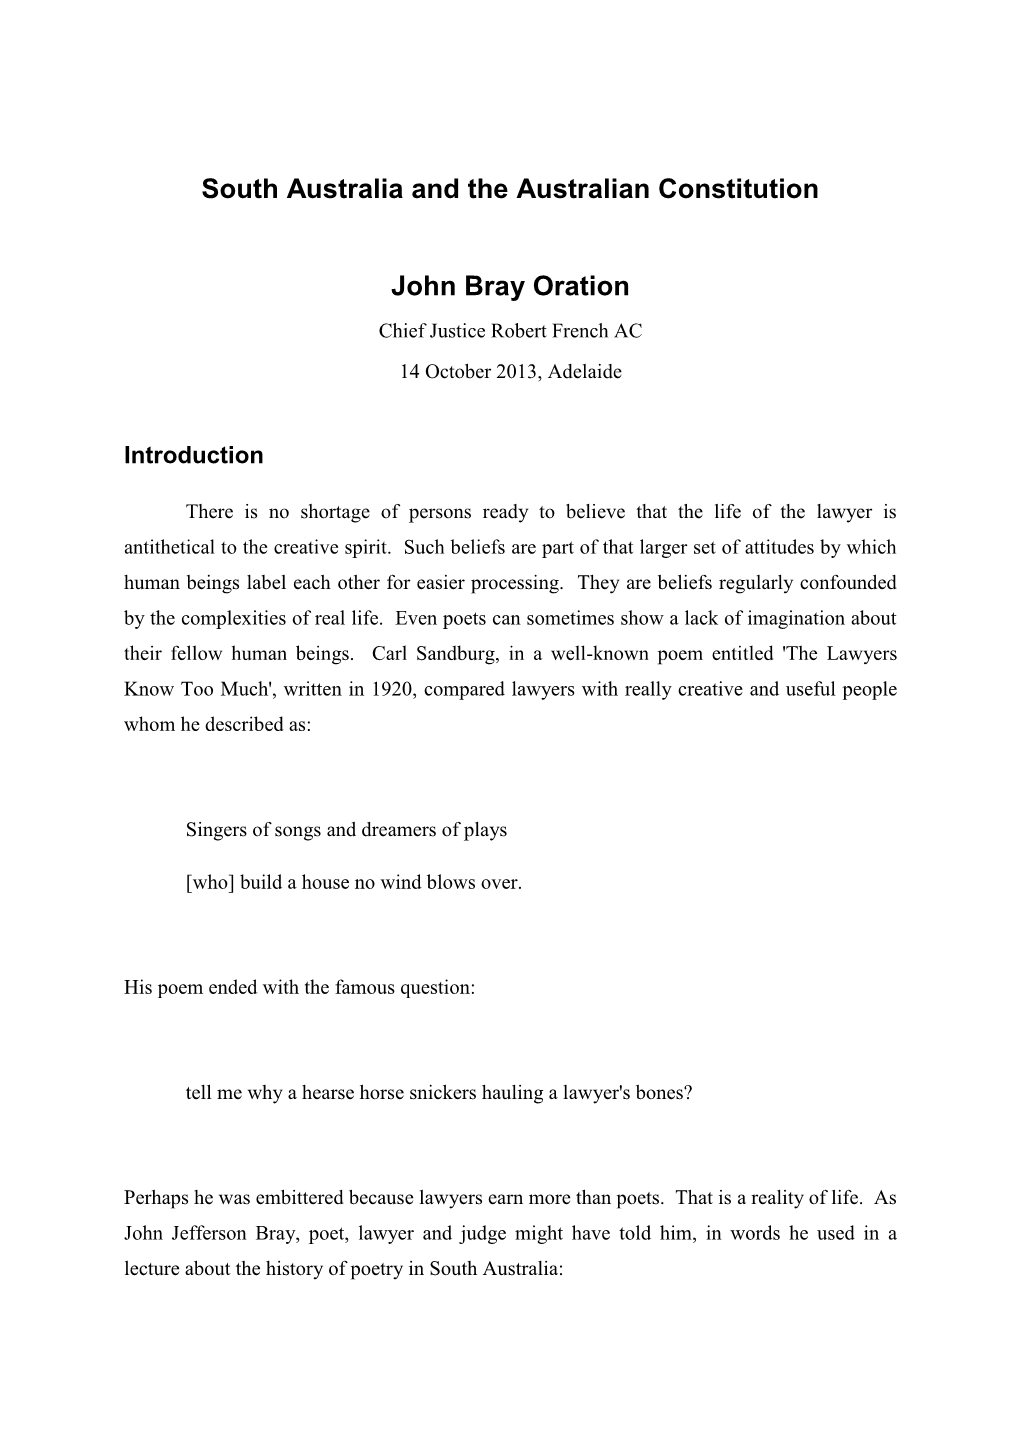 South Australia and the Australian Constitution John Bray Oration